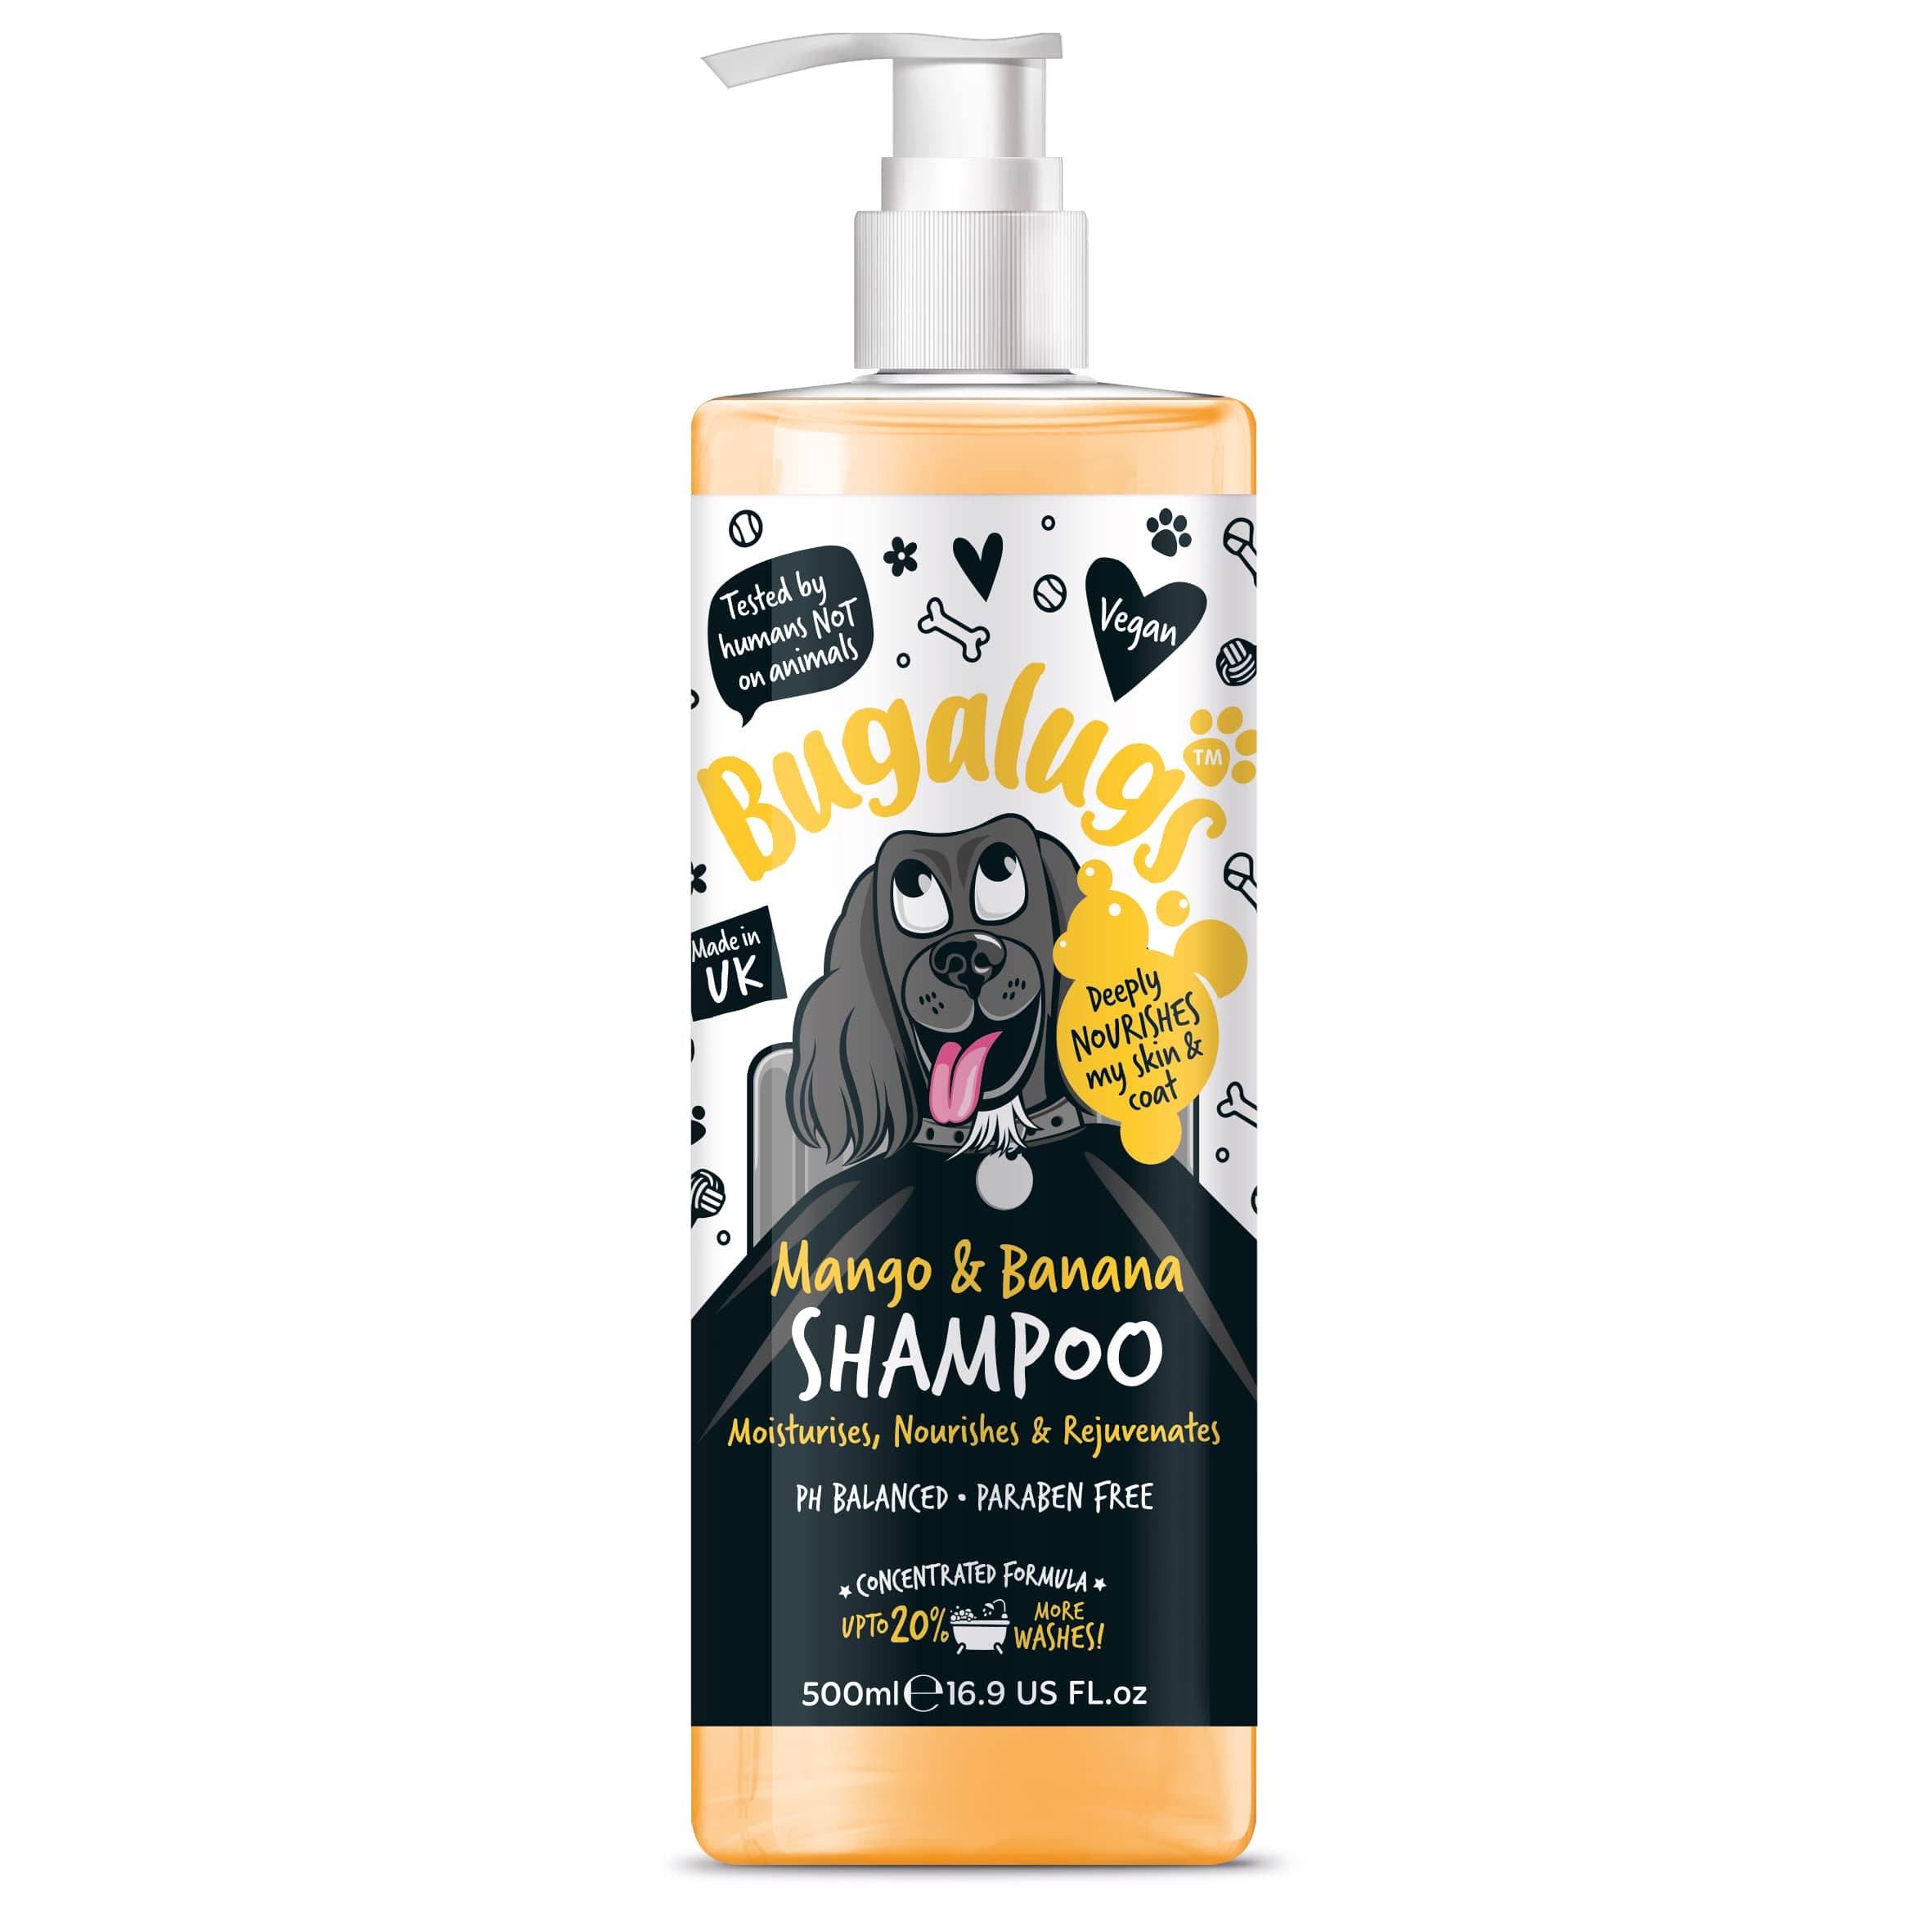 A bottle of BUGALUGS Dog Shampoo Tropical Mango & Banana